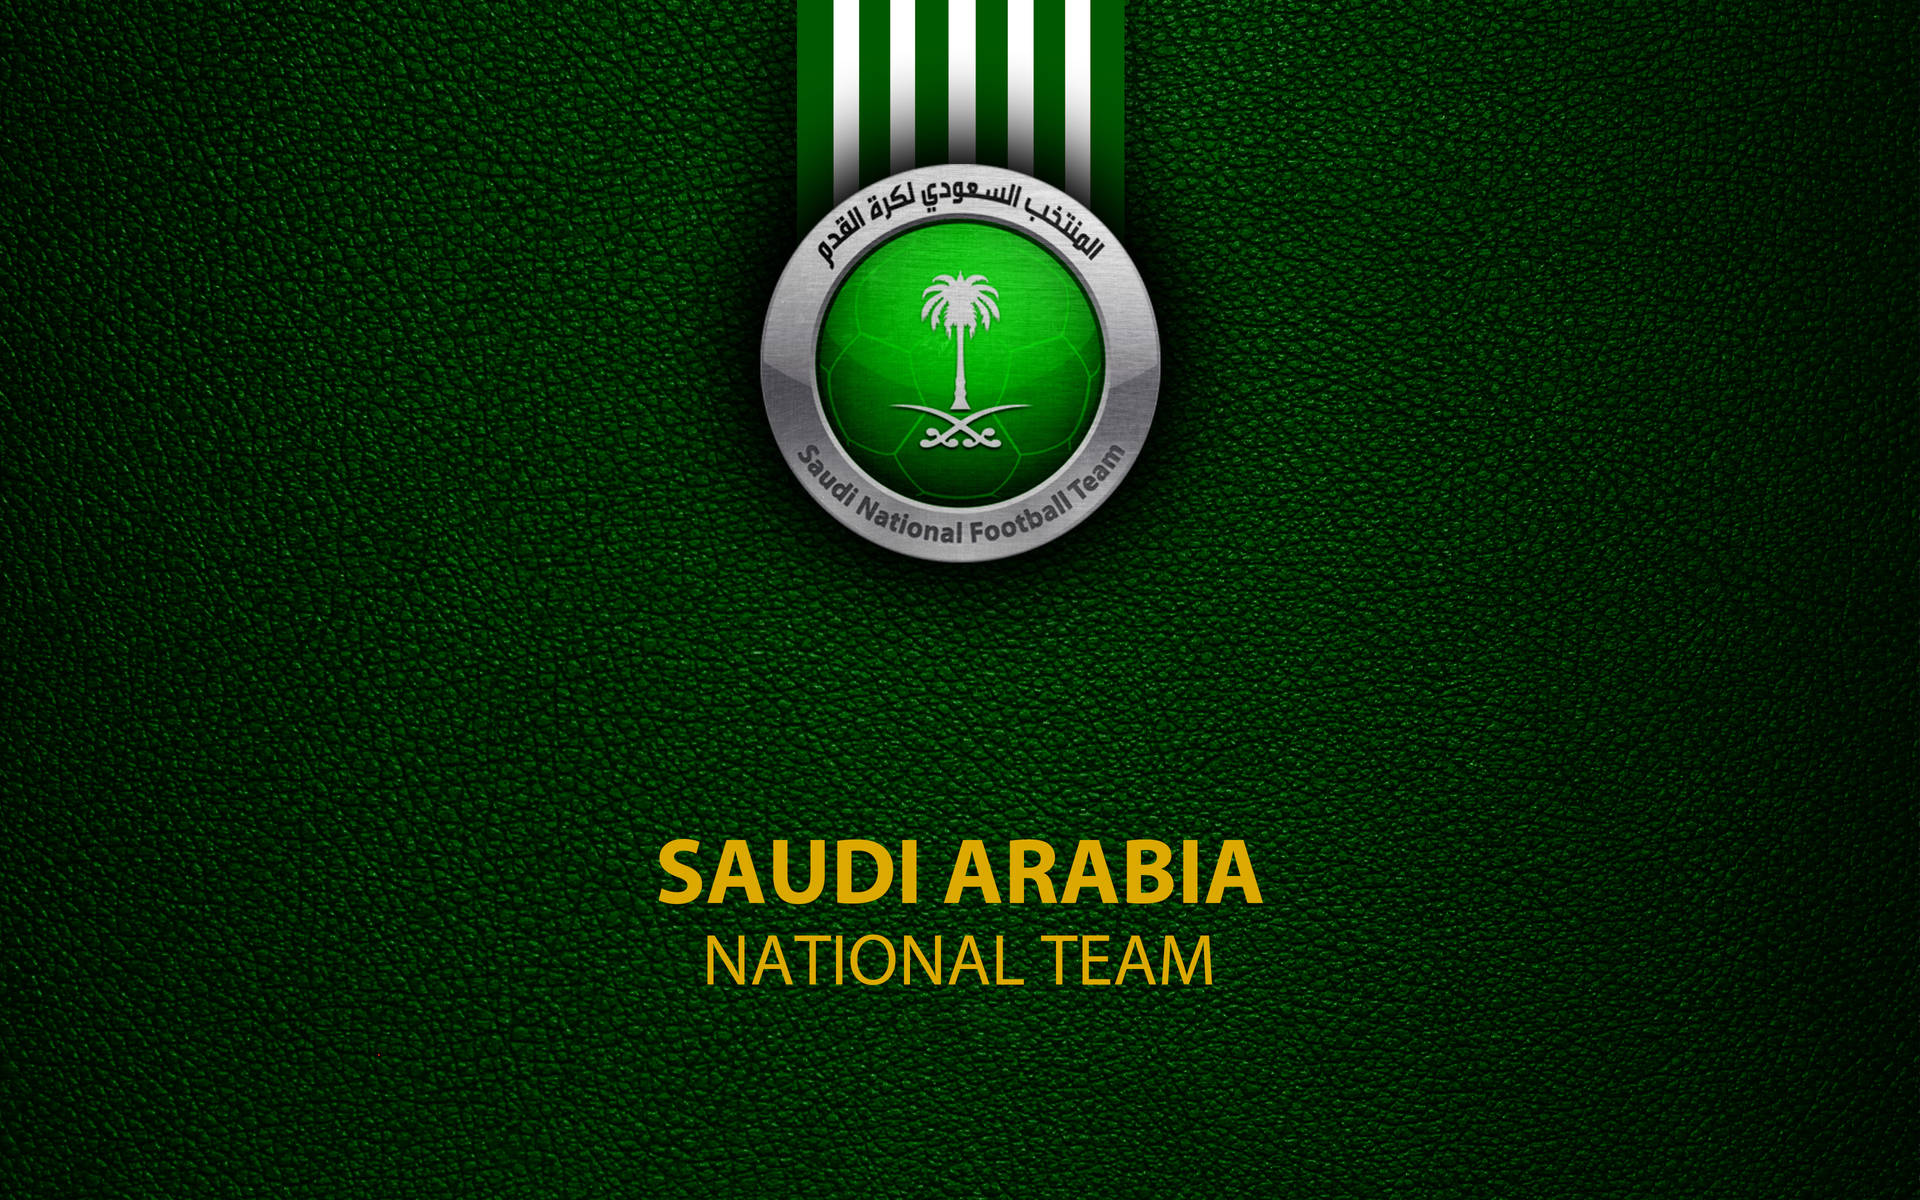 Saudi Arabia National Football Team Emblem Picture